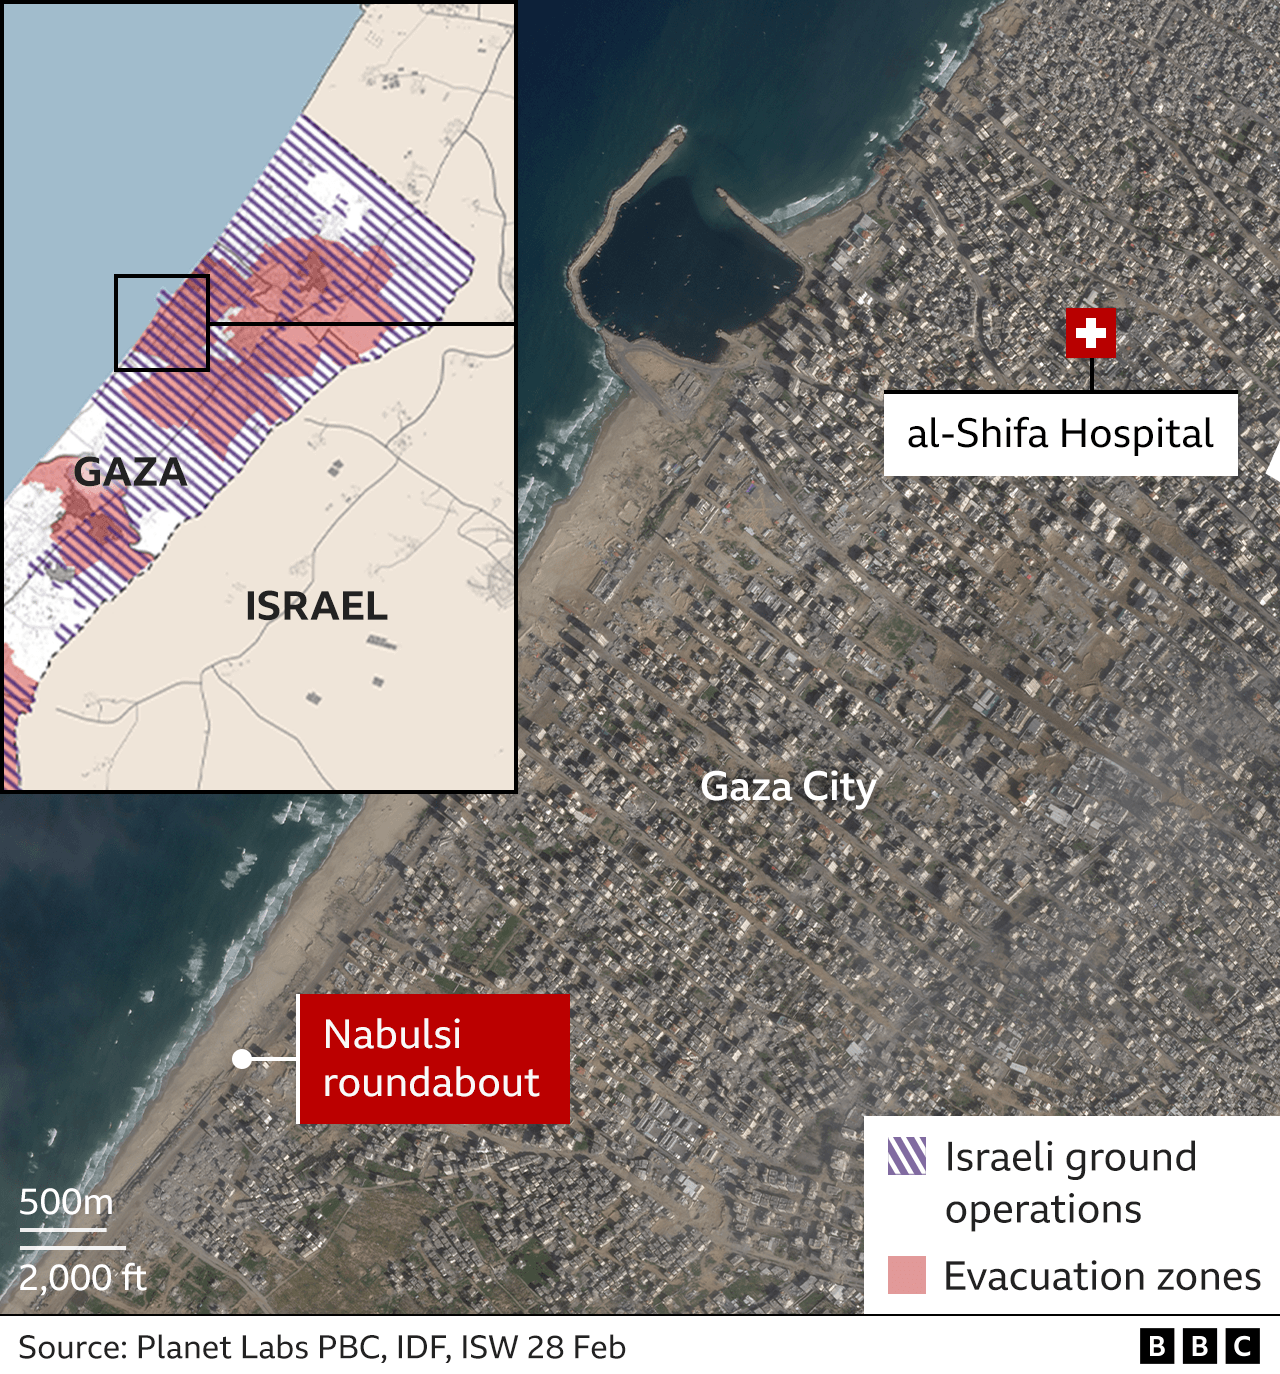 Map showing Gaza City, Nabulsi roundabout and al-Shifa Hospital